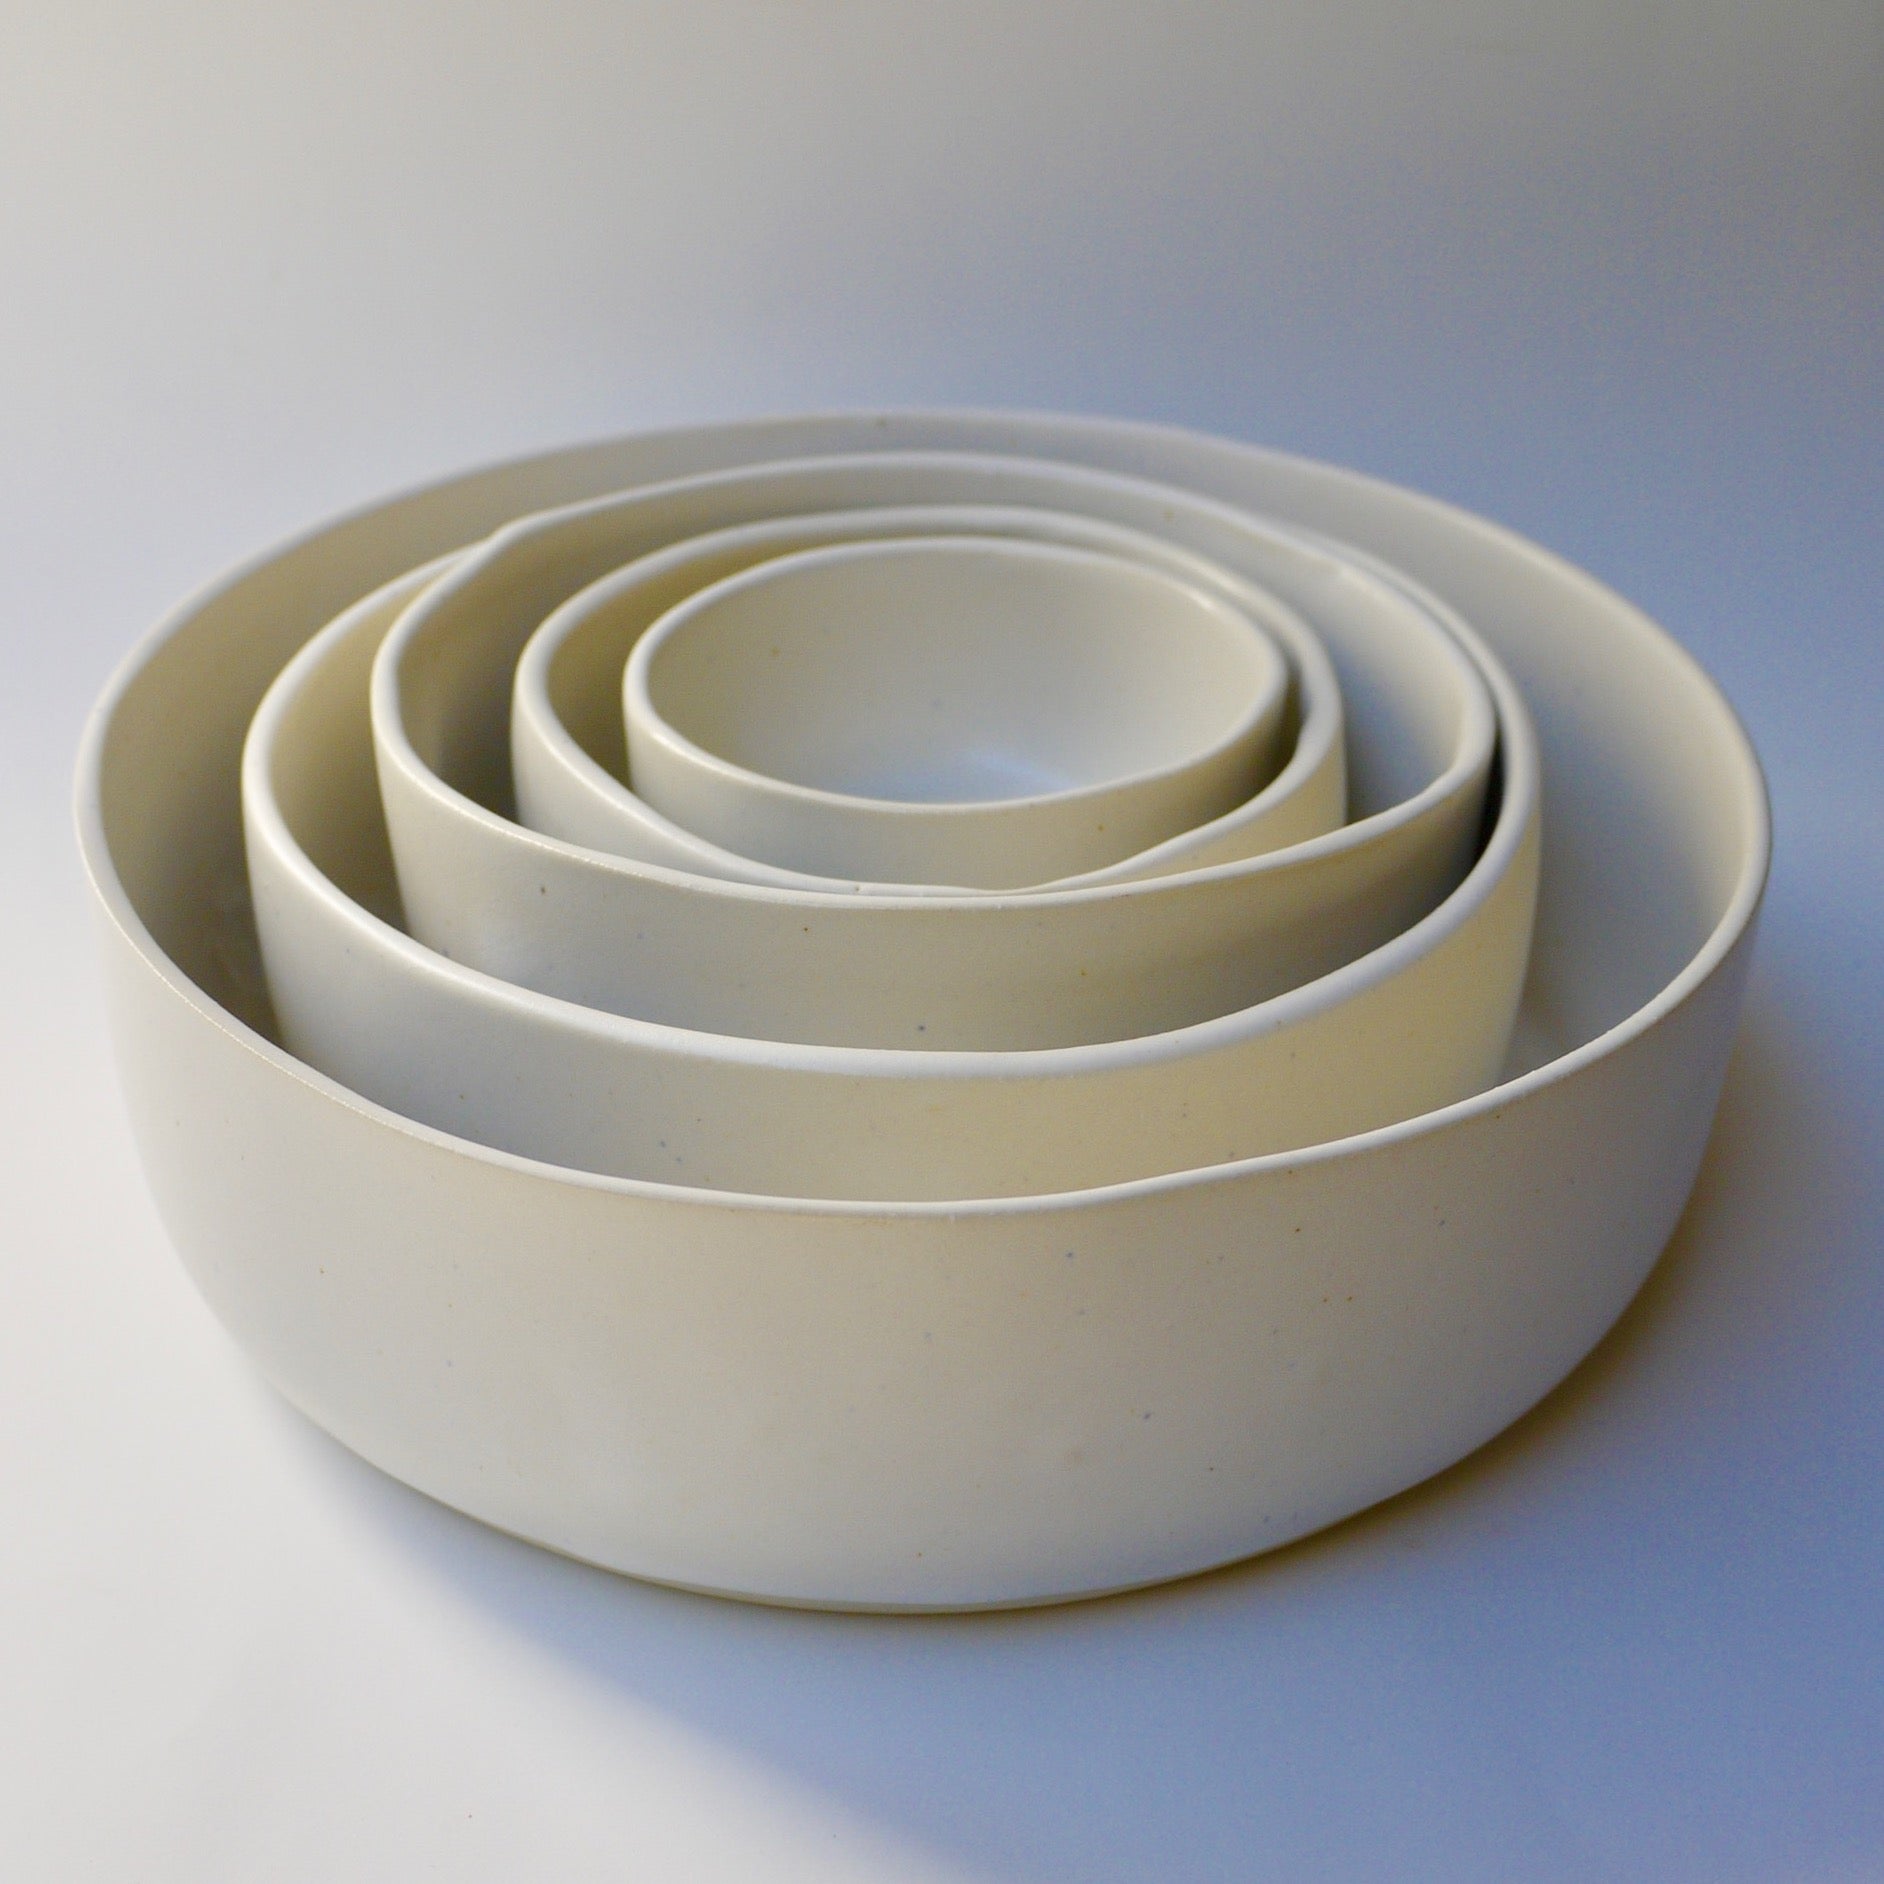 Handmade Nesting Bowls, Set of 5